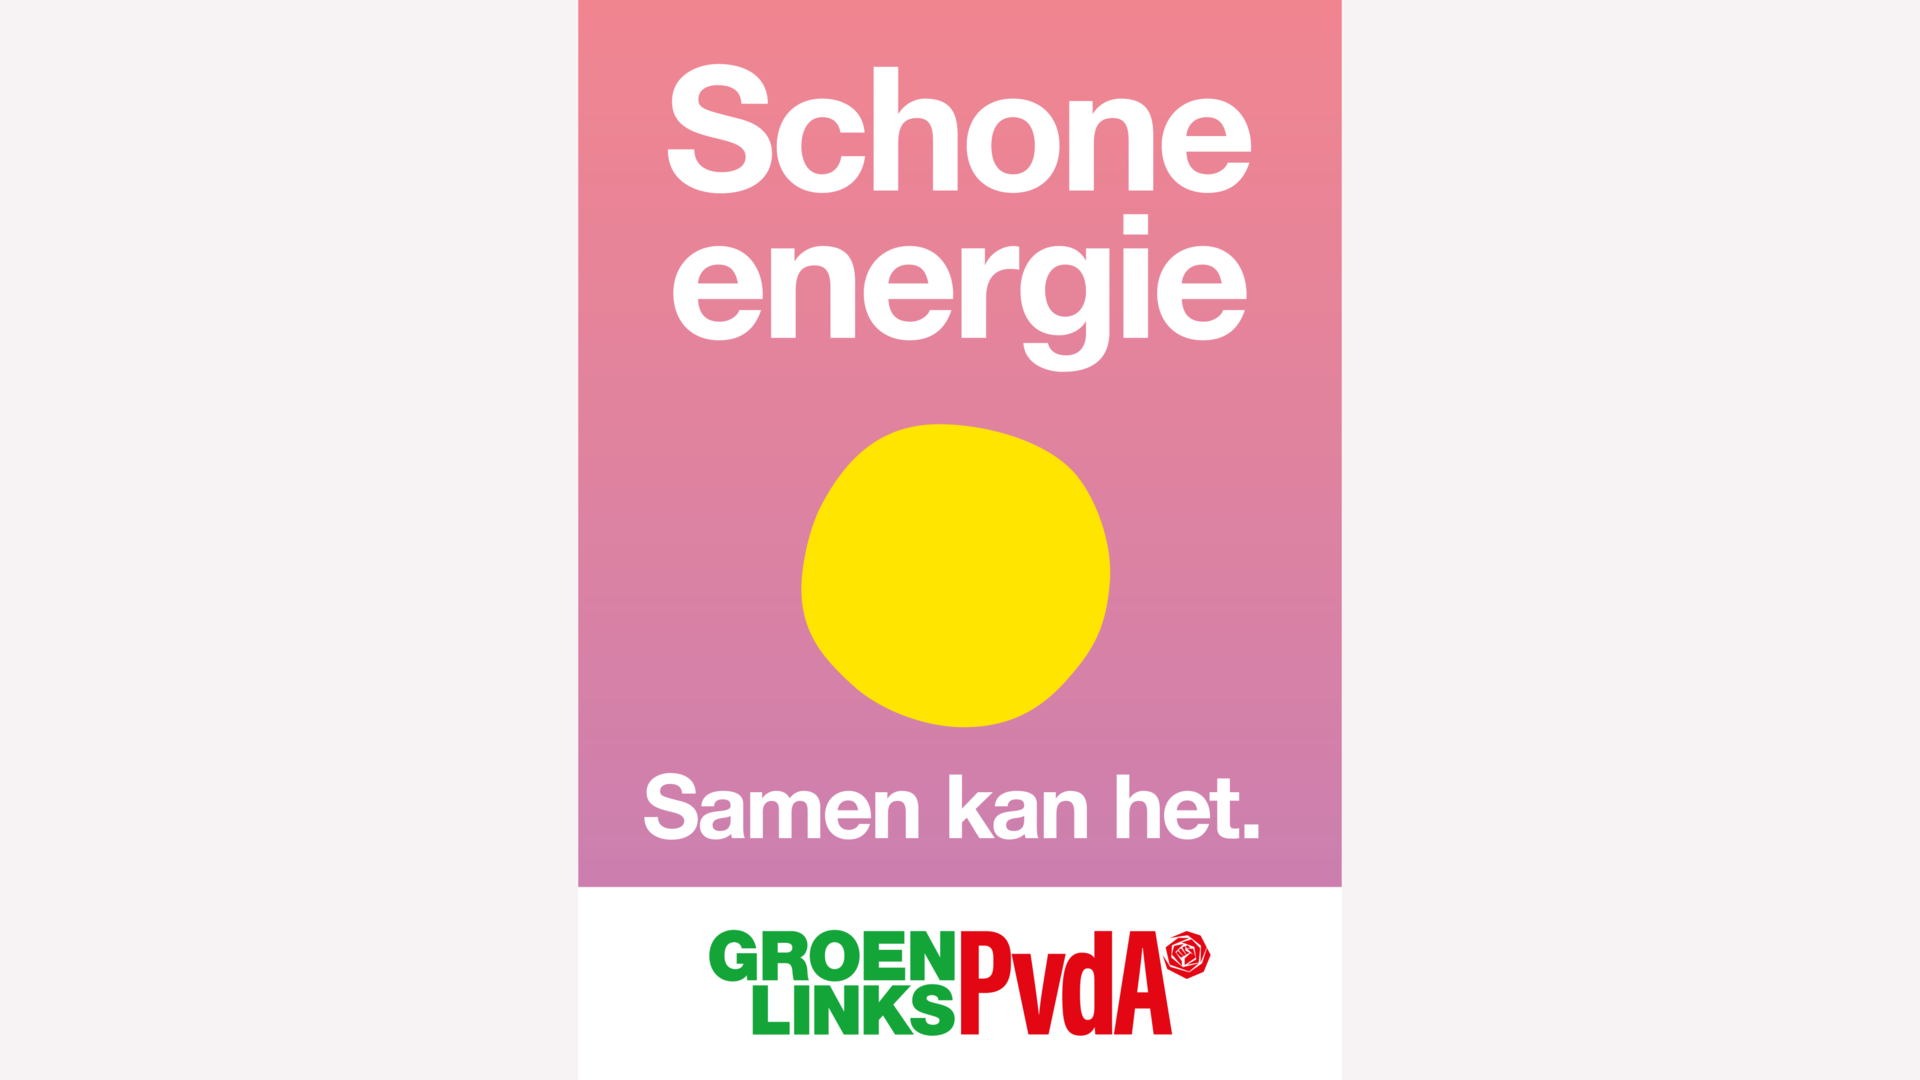 groenlinks-pvda-posters-tk23-schone-energie